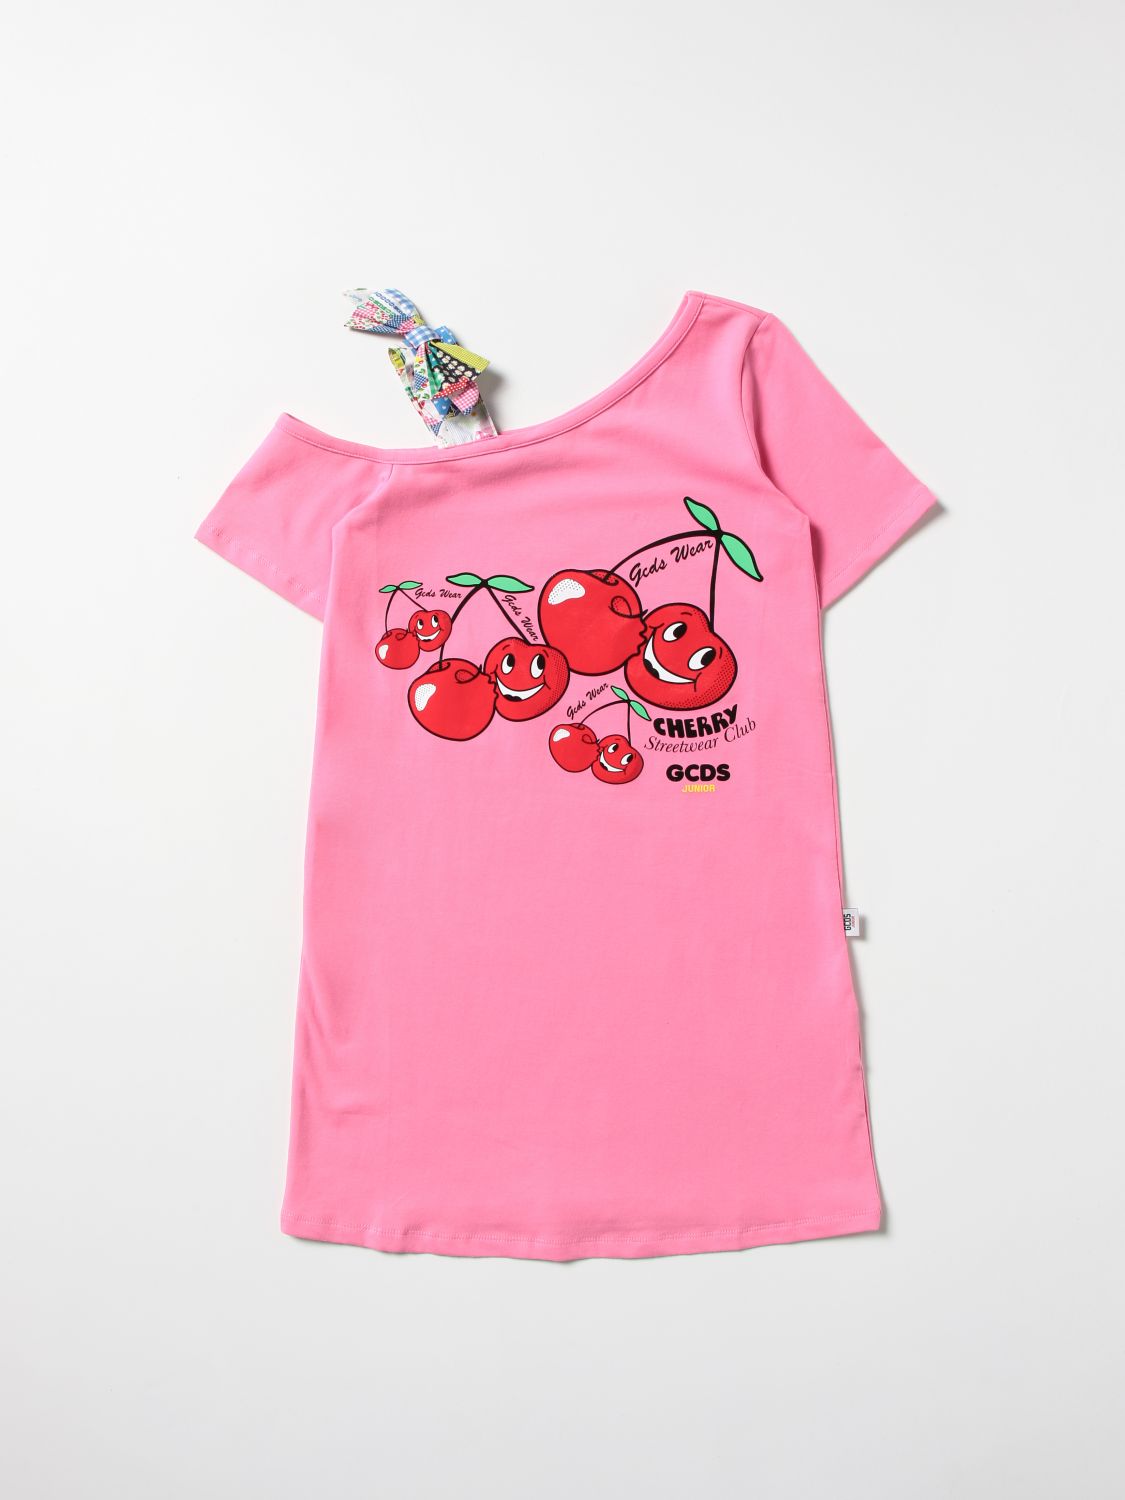 Gcds Kids' T-shirt Dress With Cherry Print In Pink